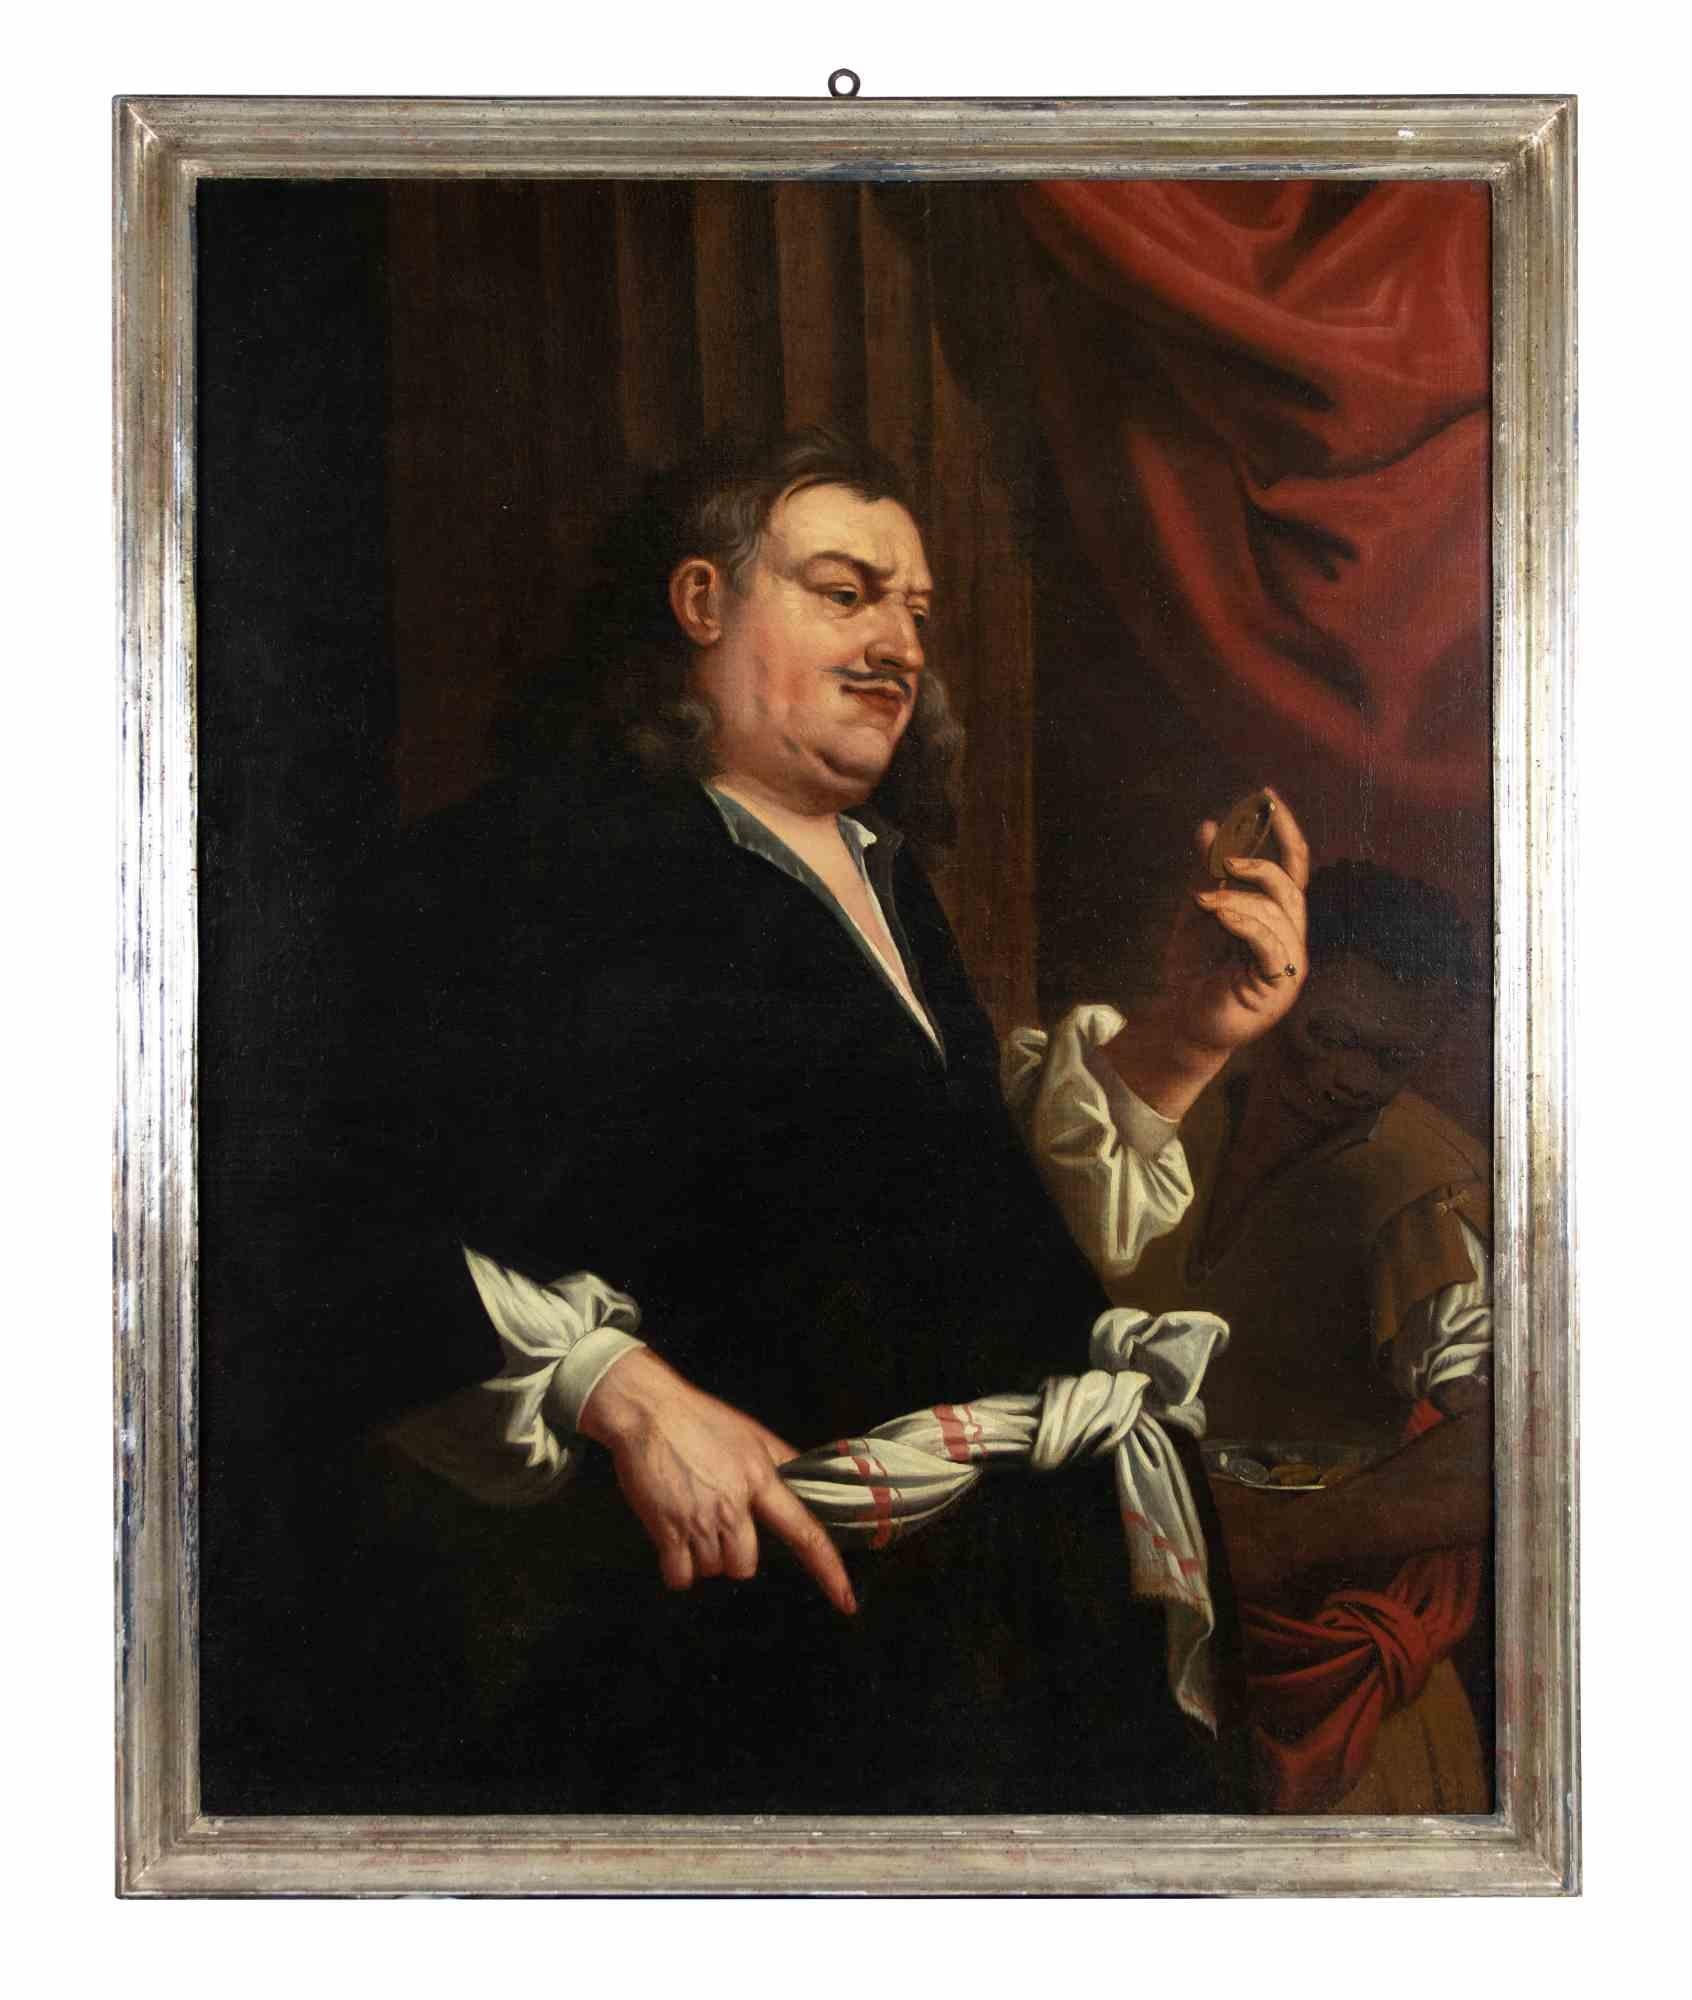 18th century merchant